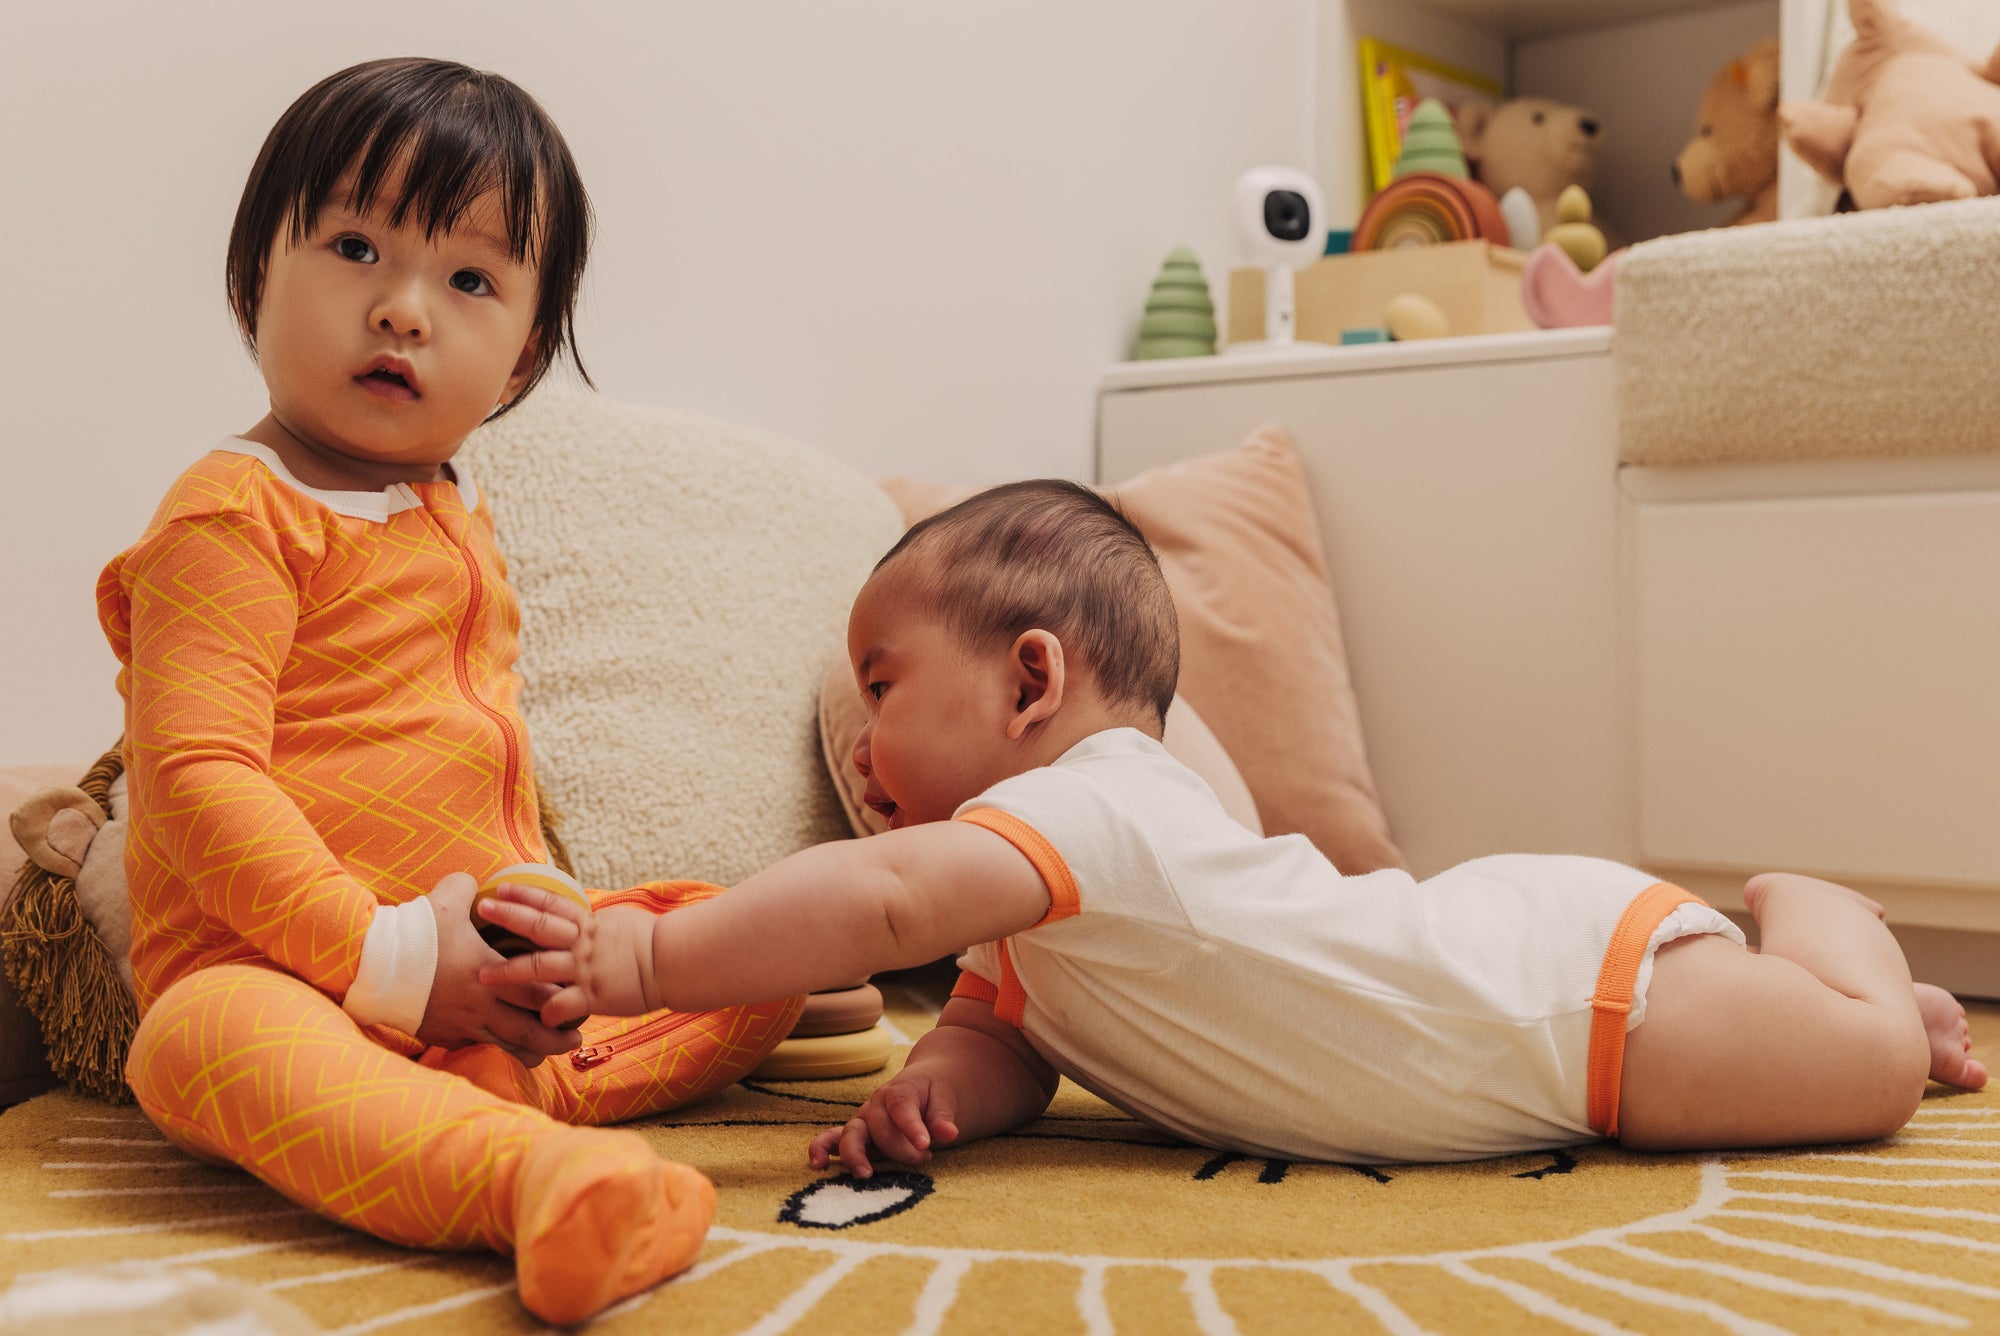 “My kids share a room. How do I handle naps and bedtimes?”